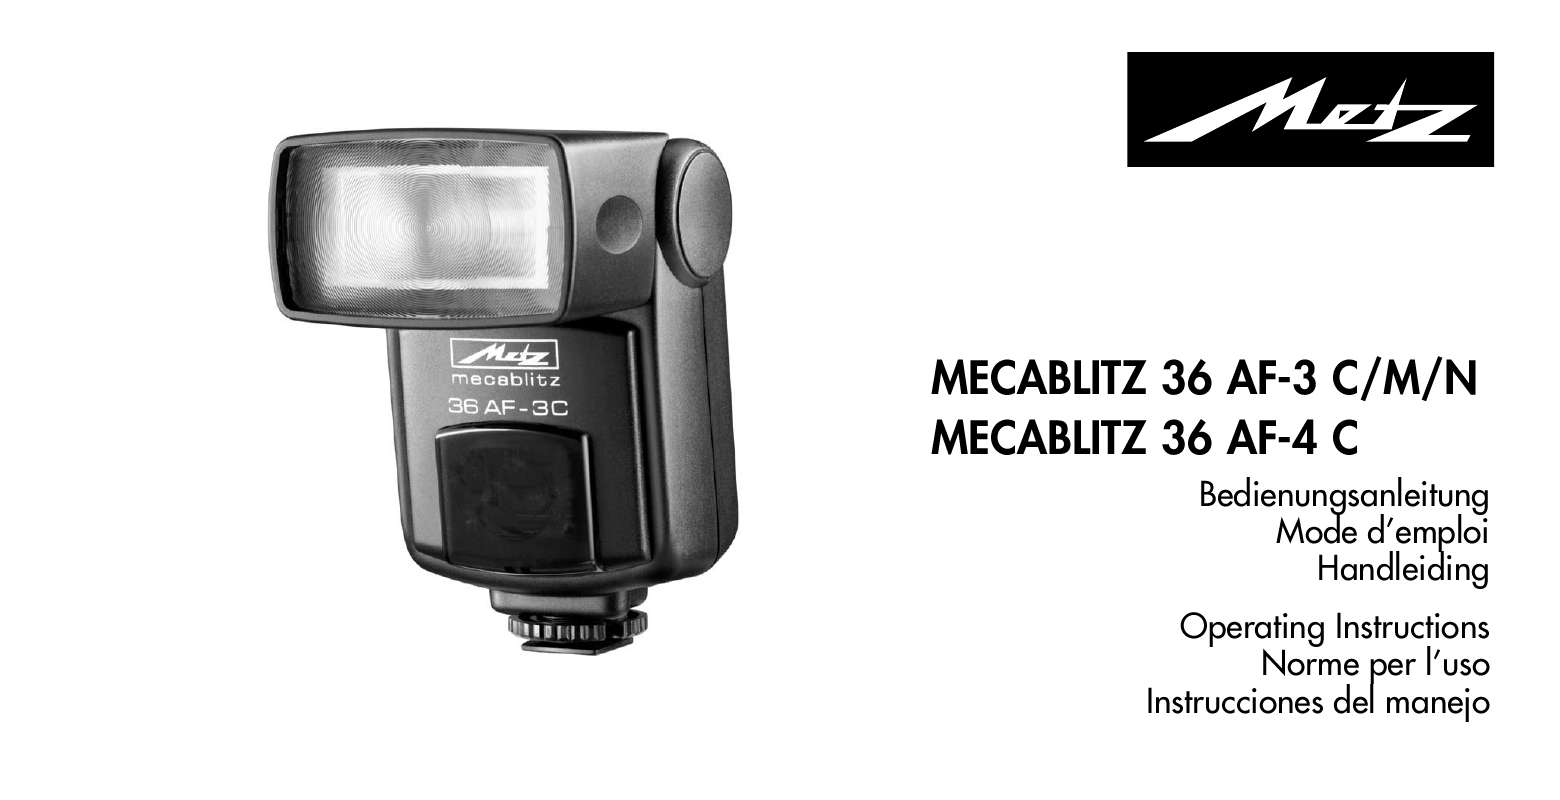 Guide utilisation  METZ MECABLITZ 36 AF-3 C  de la marque METZ